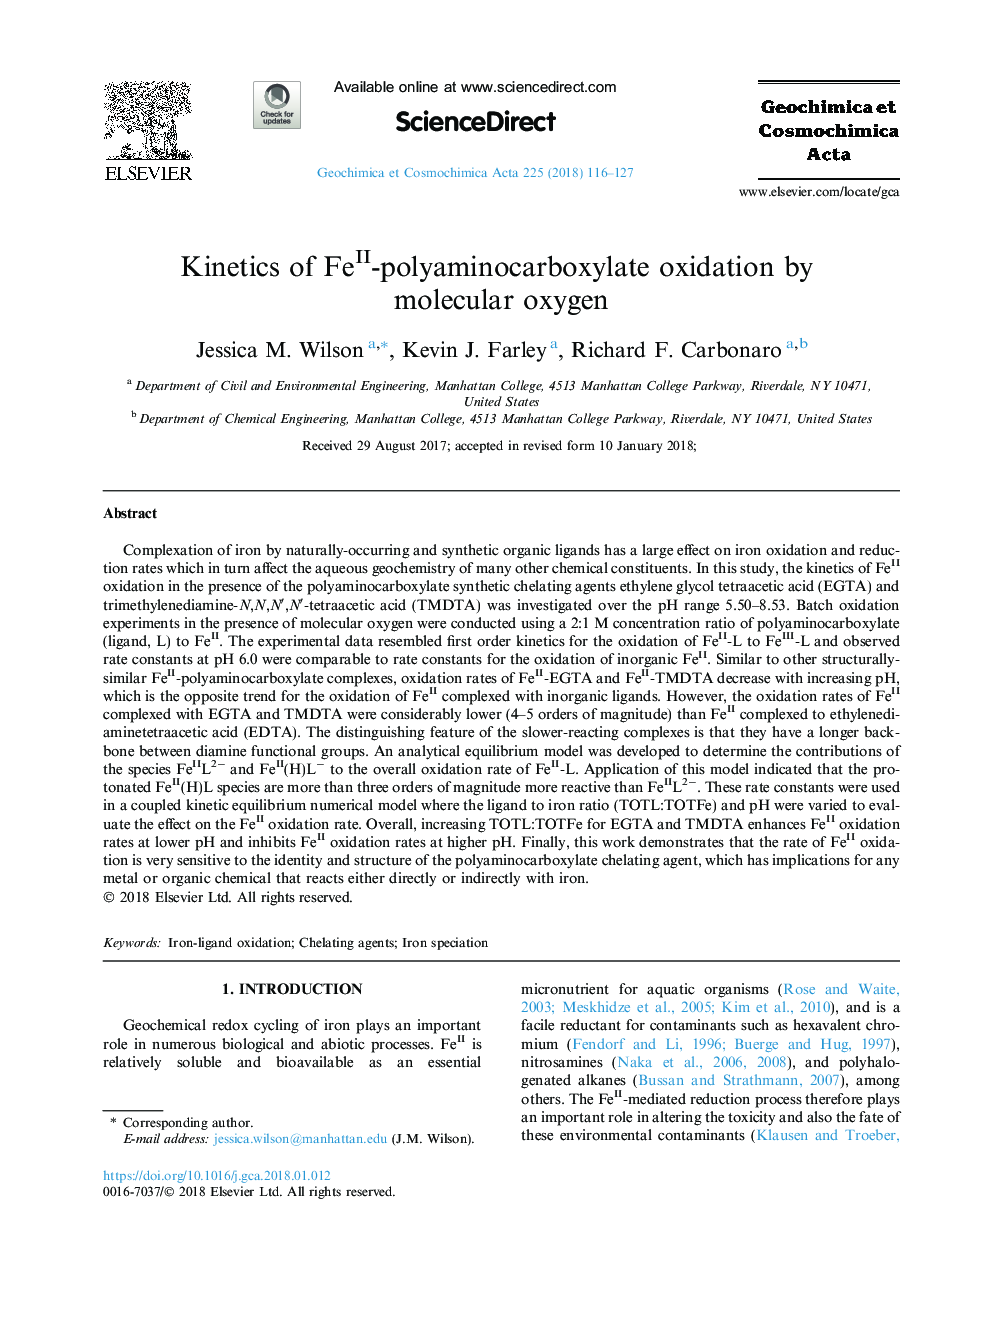 Kinetics of FeII-polyaminocarboxylate oxidation by molecular oxygen